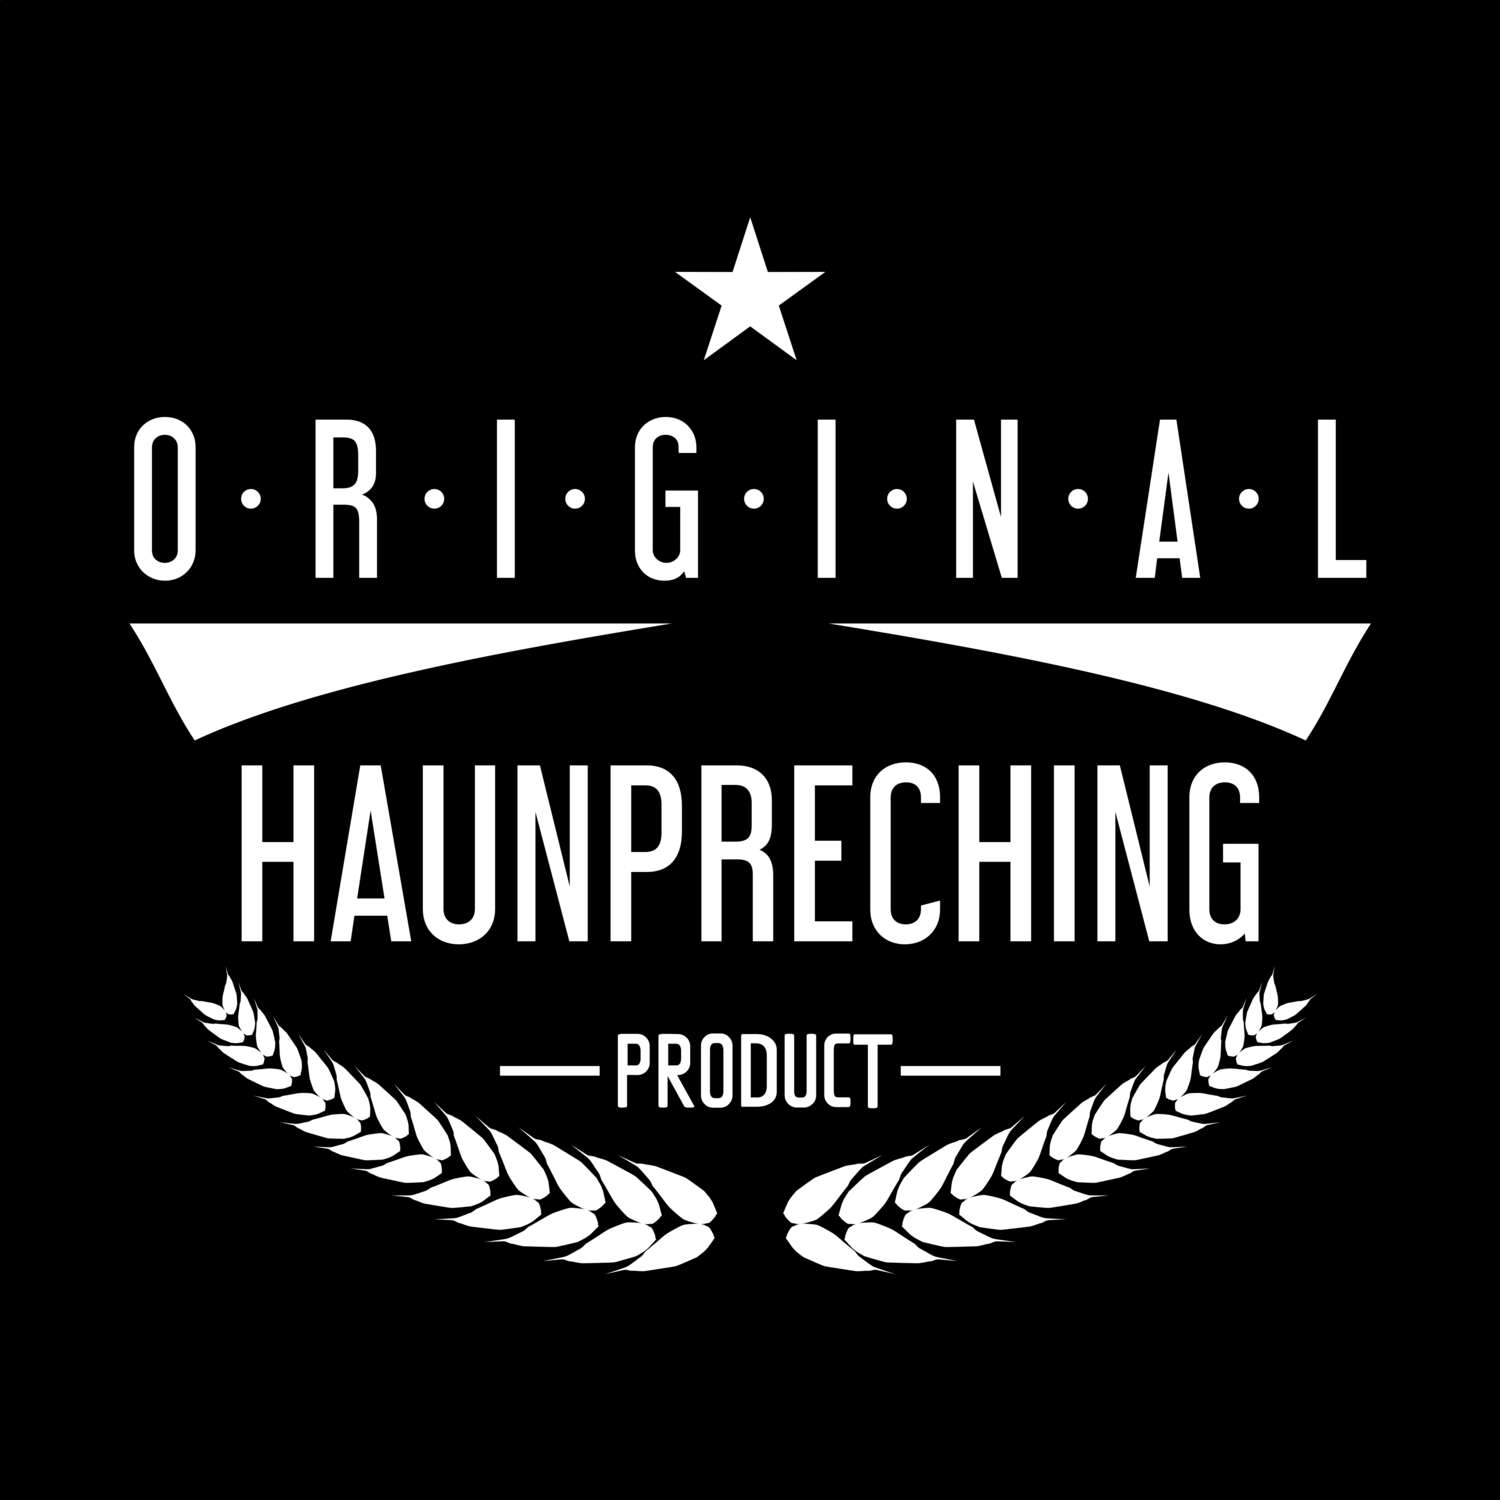 Haunpreching T-Shirt »Original Product«